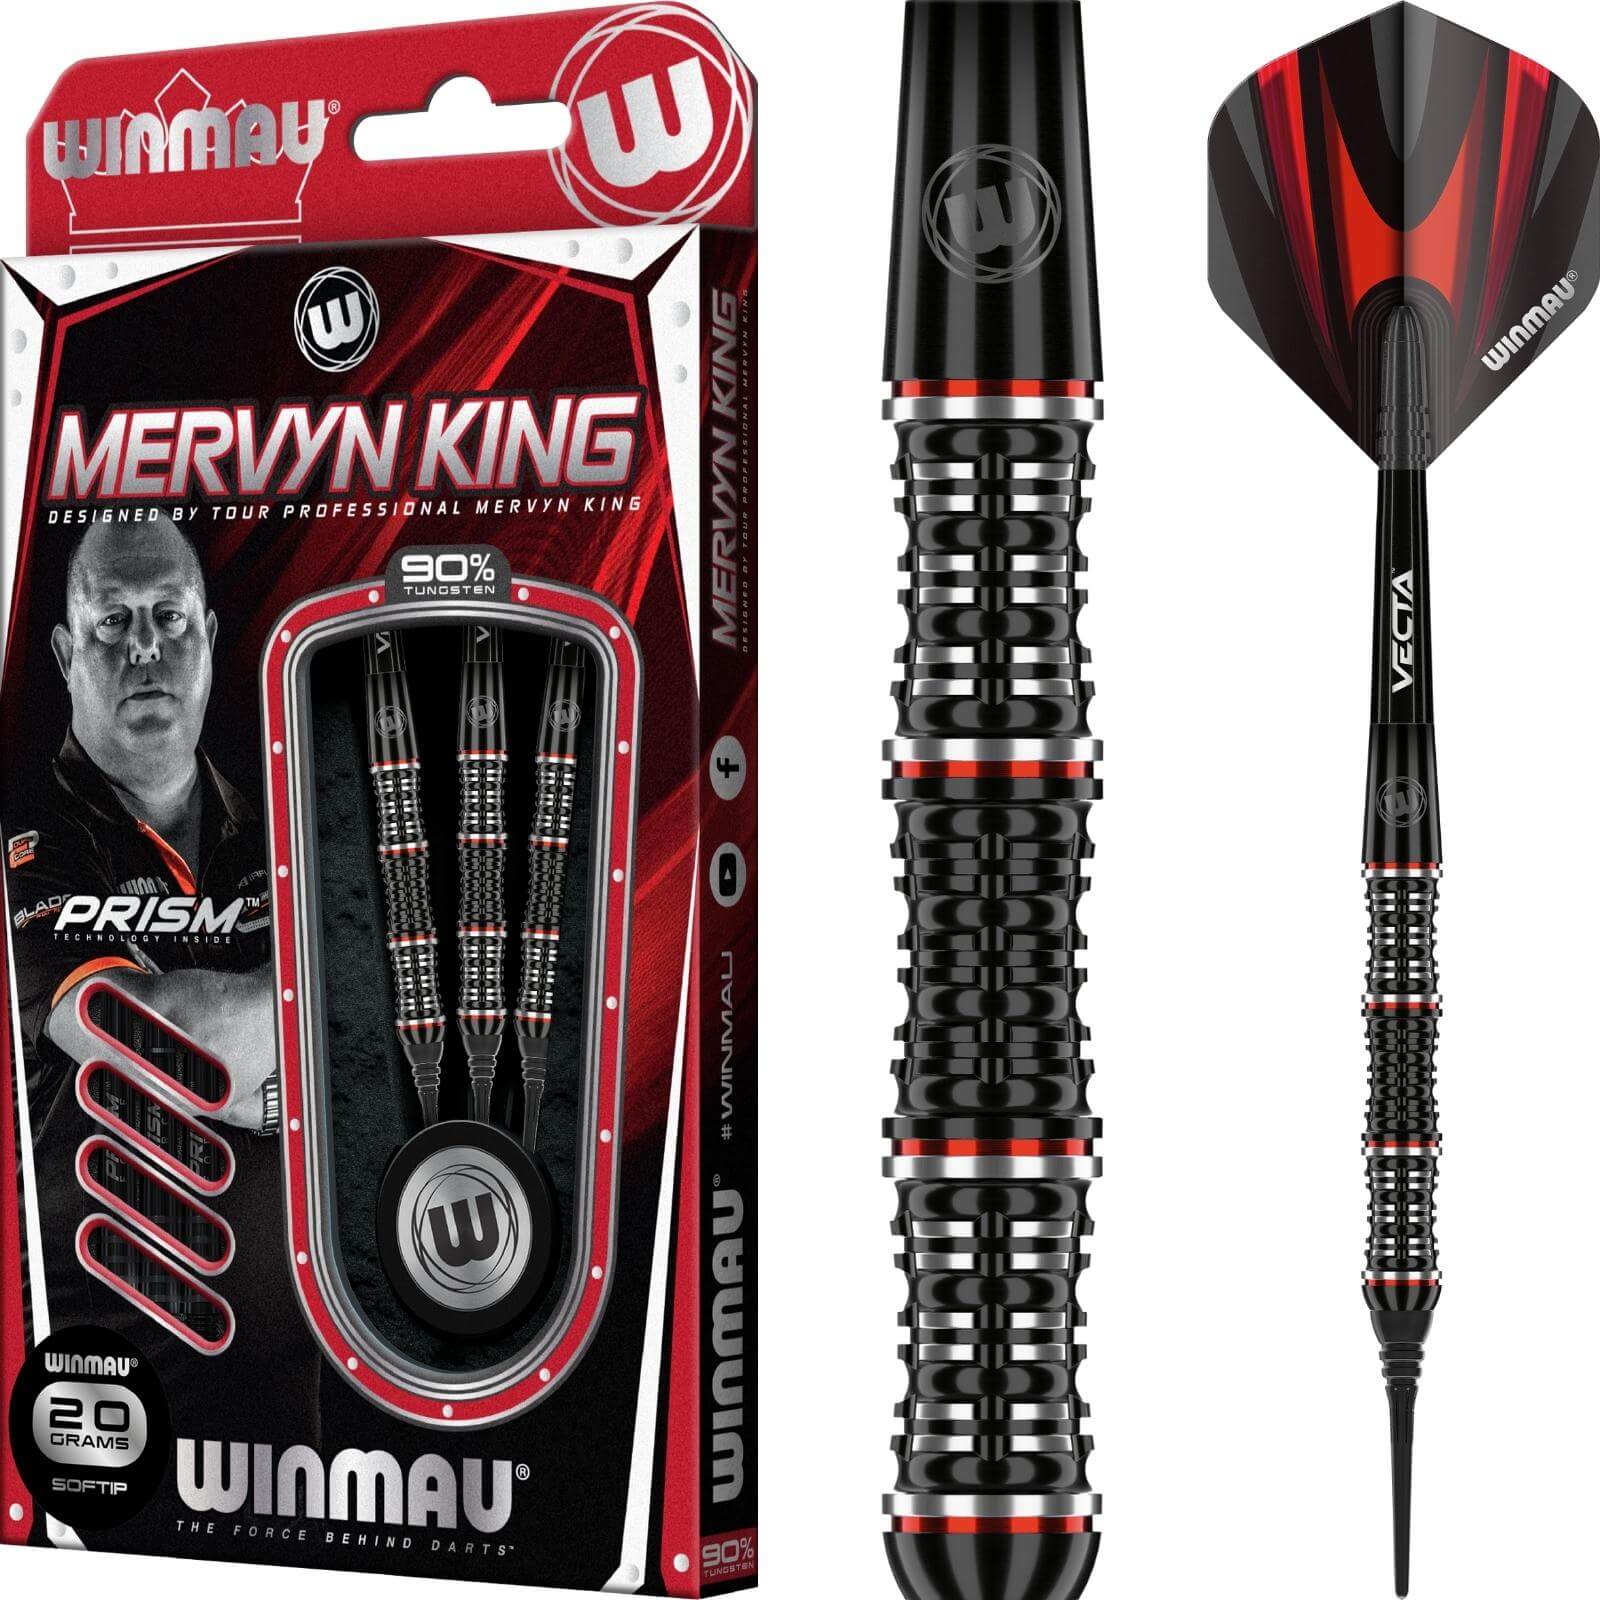 Darts - Winmau - Mervyn King Special Edition Darts - Soft Tip - 90% Tungsten - 20g 